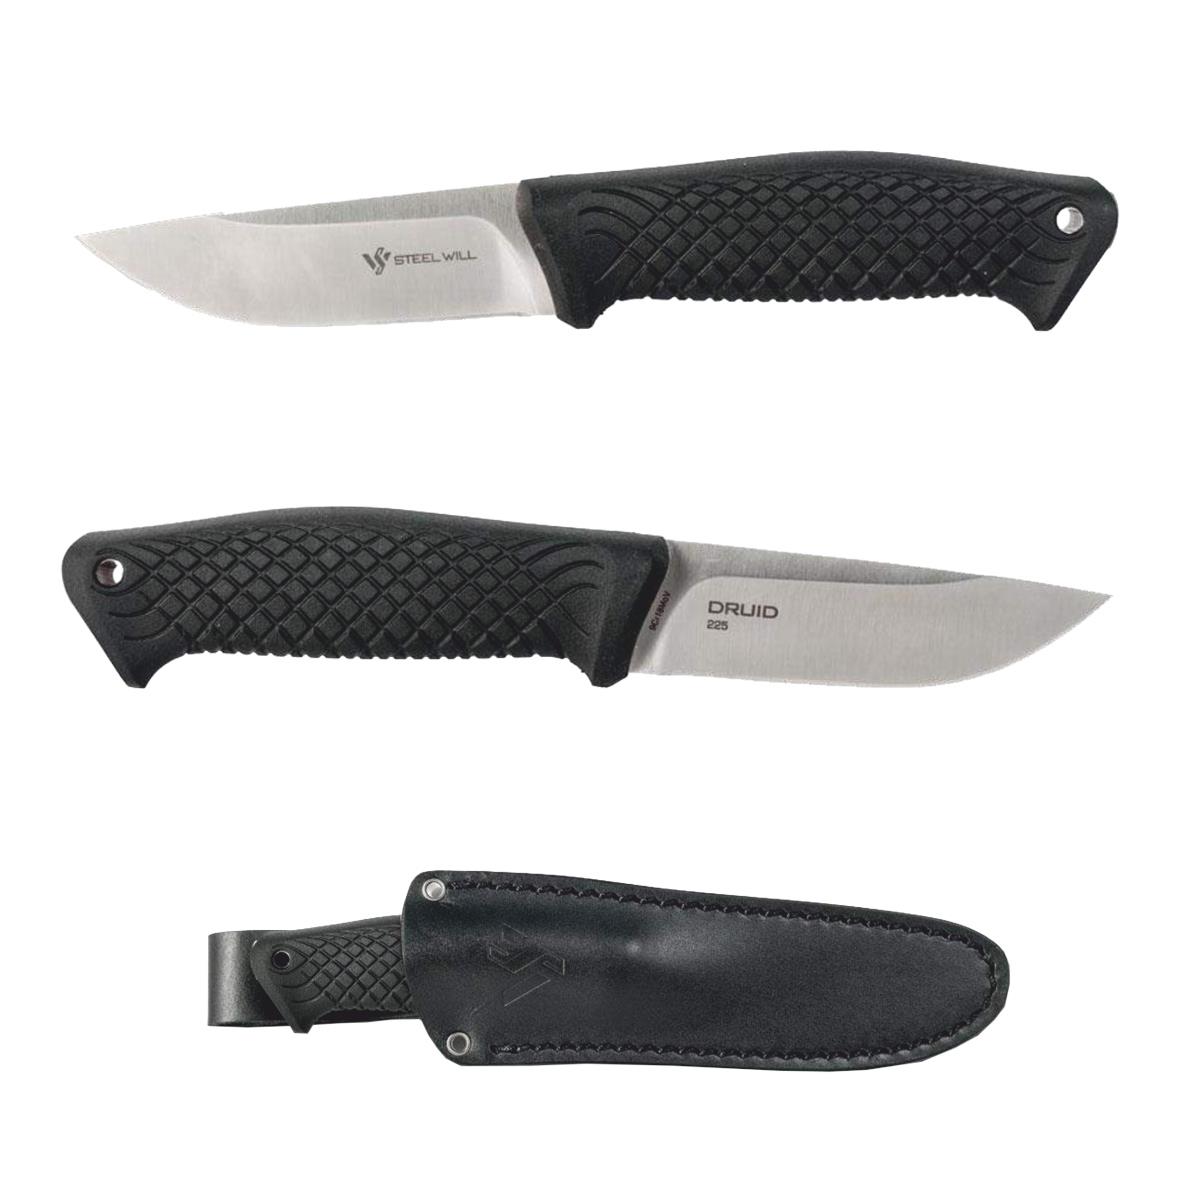 Нож 225 Druid Steel Will набор специальных головок для тнвд bosch av steel